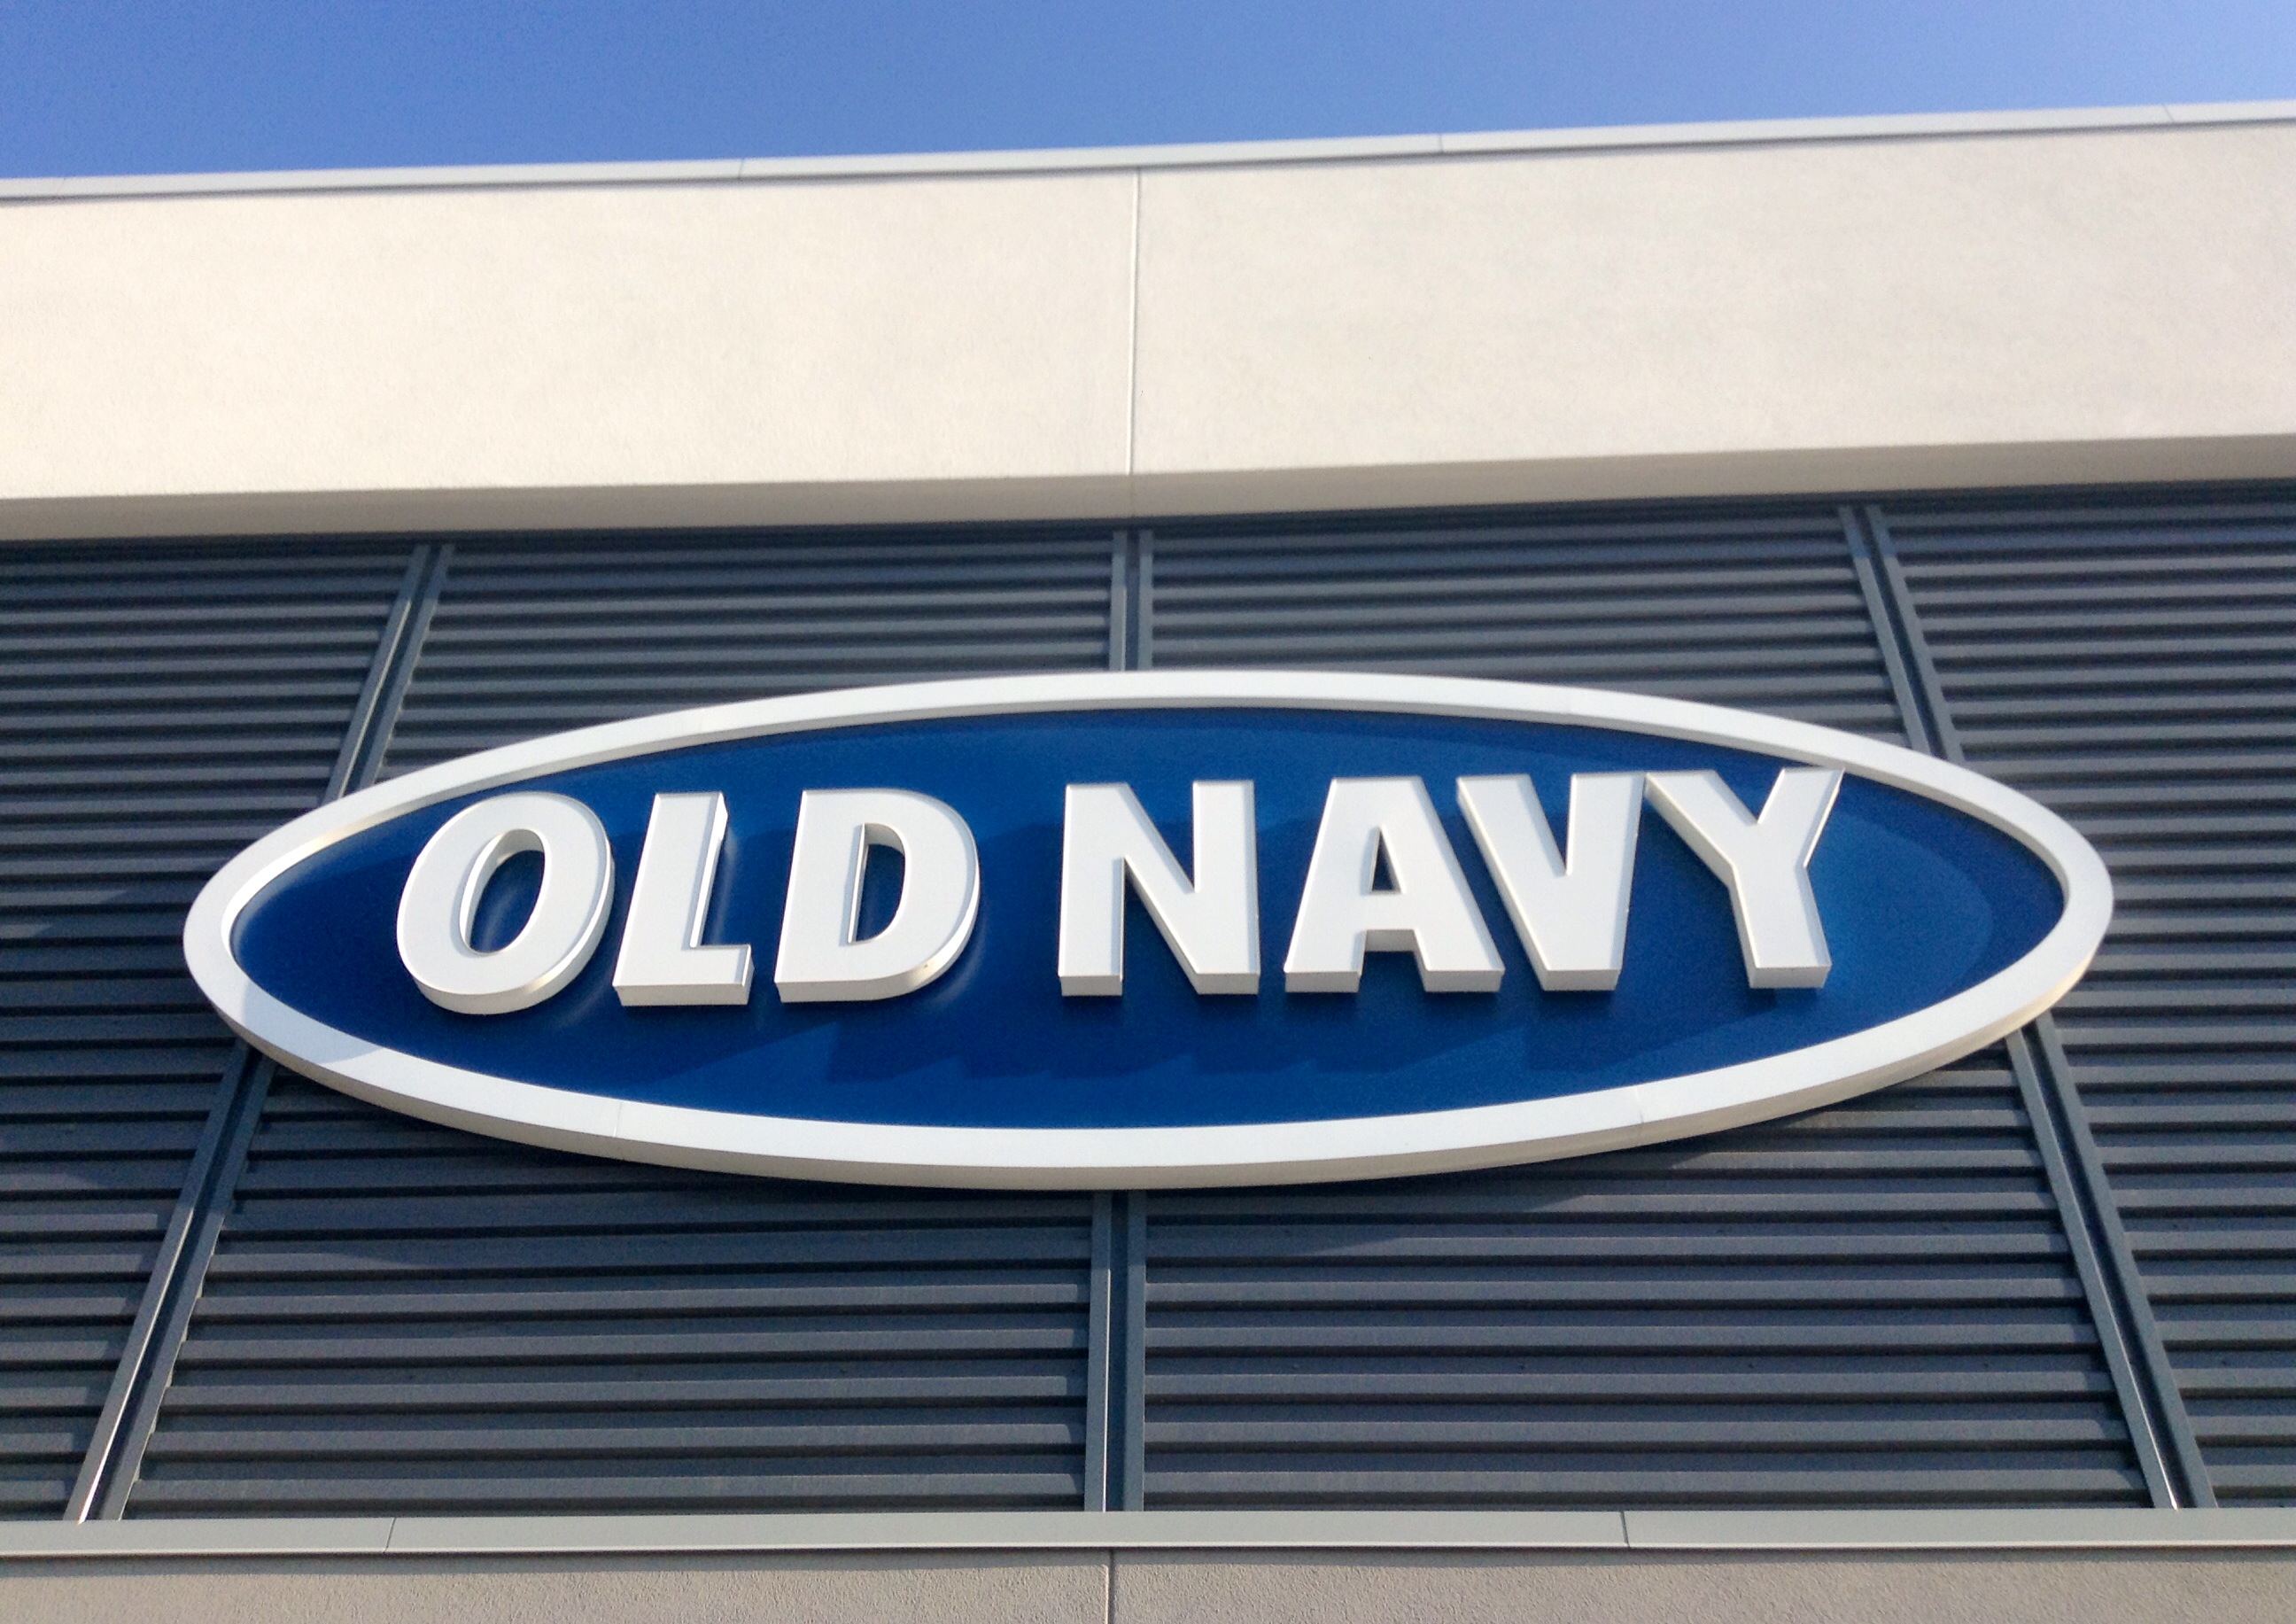 Old navy logo